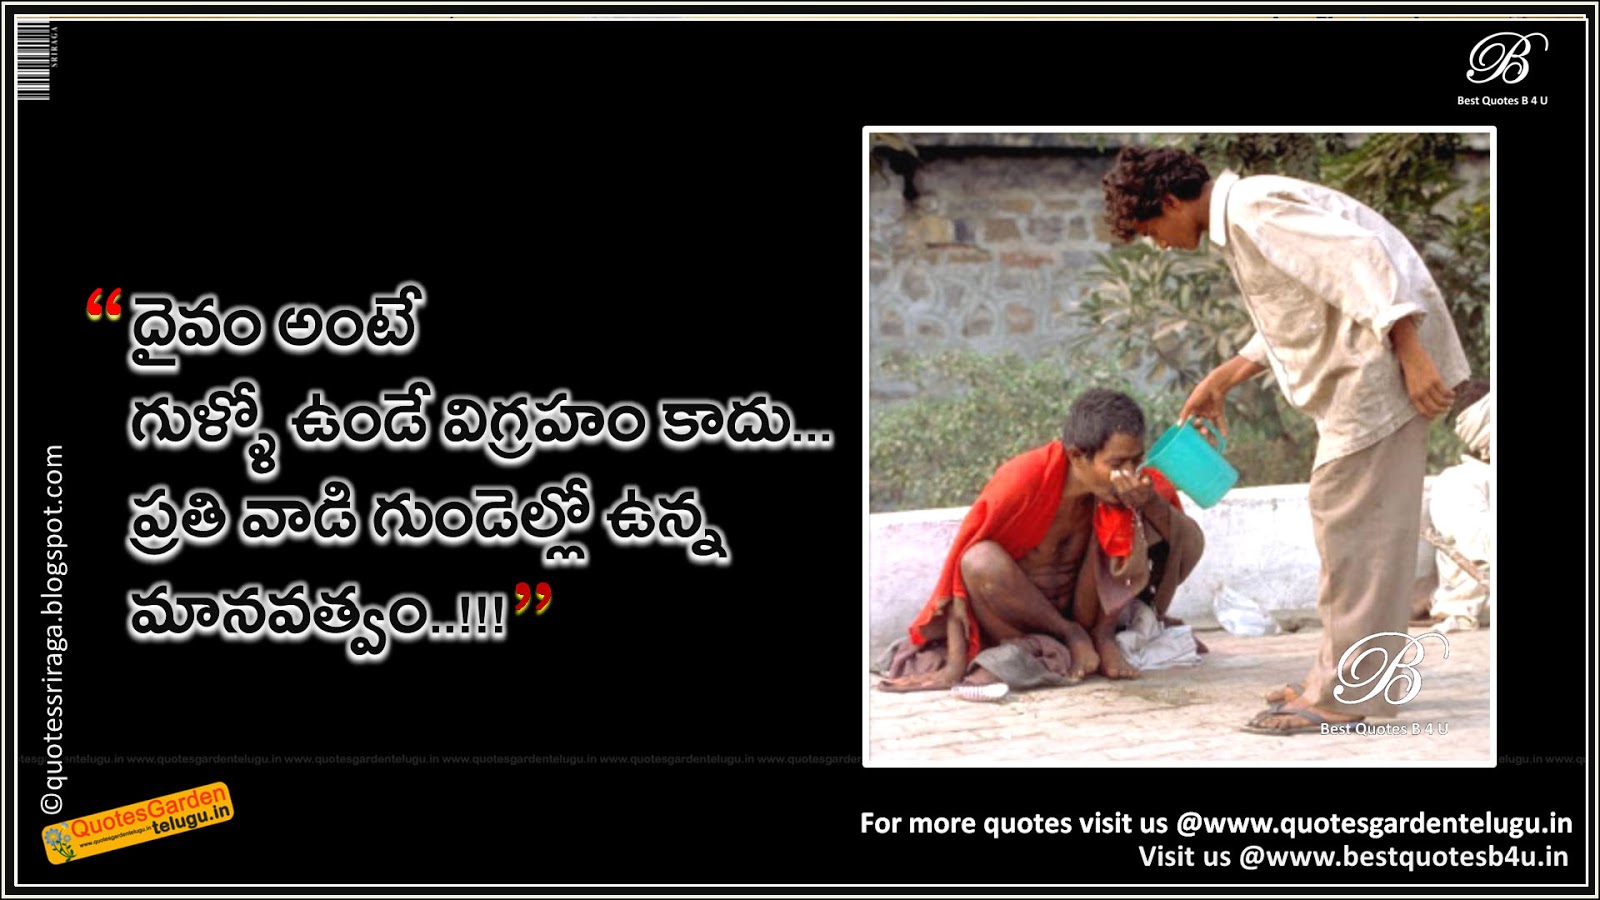 Telugu good heart humanity quotes | Like Share Follow